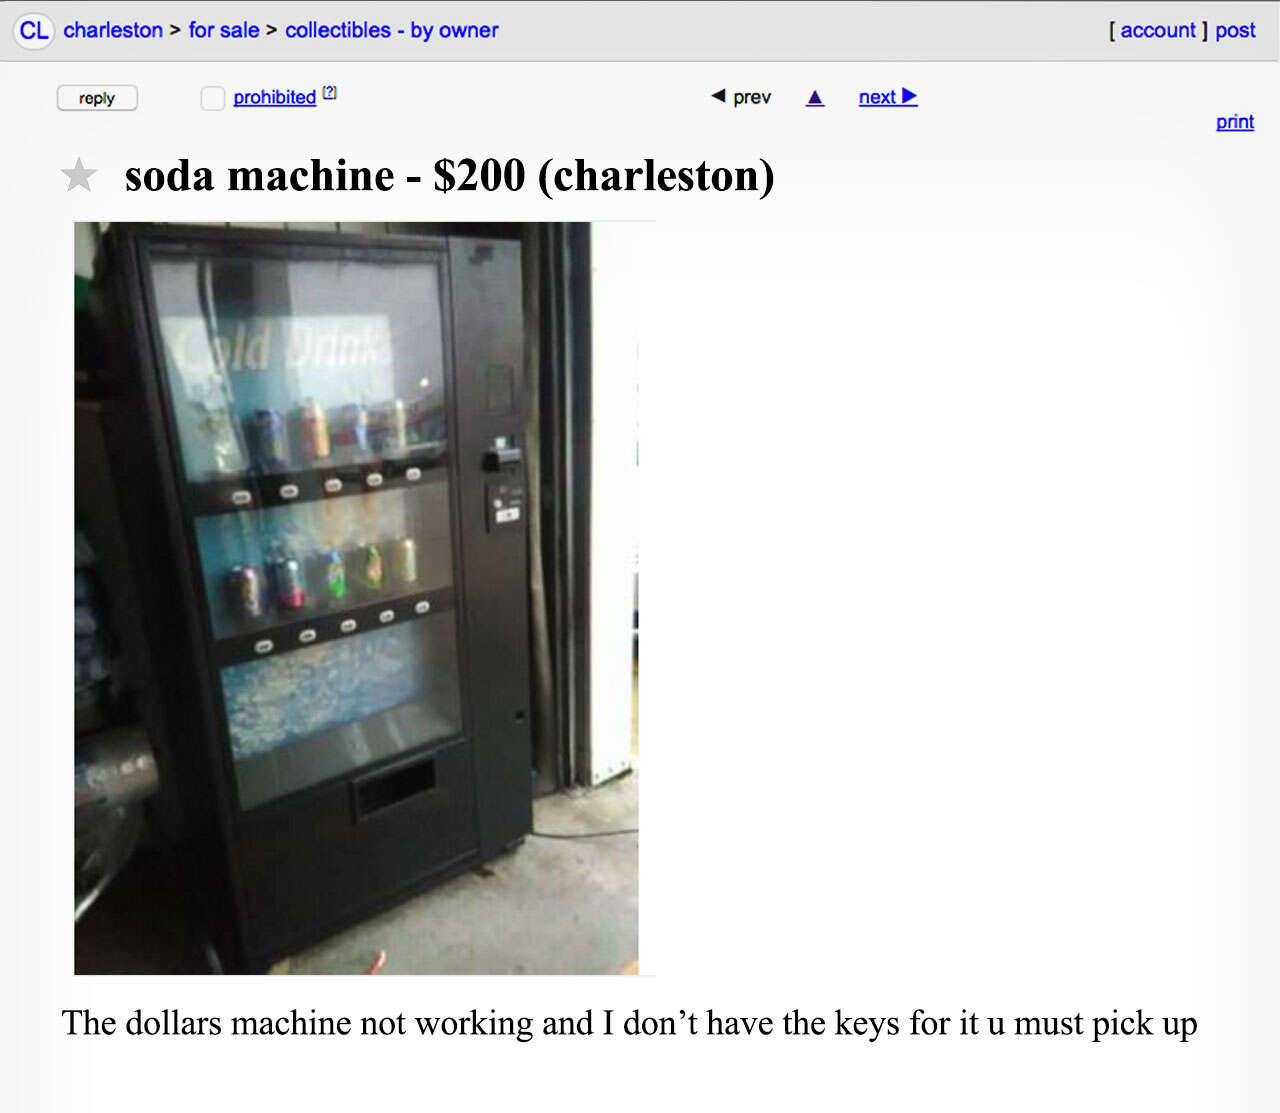 A Craigslist advertisement for a broken soda machine. 